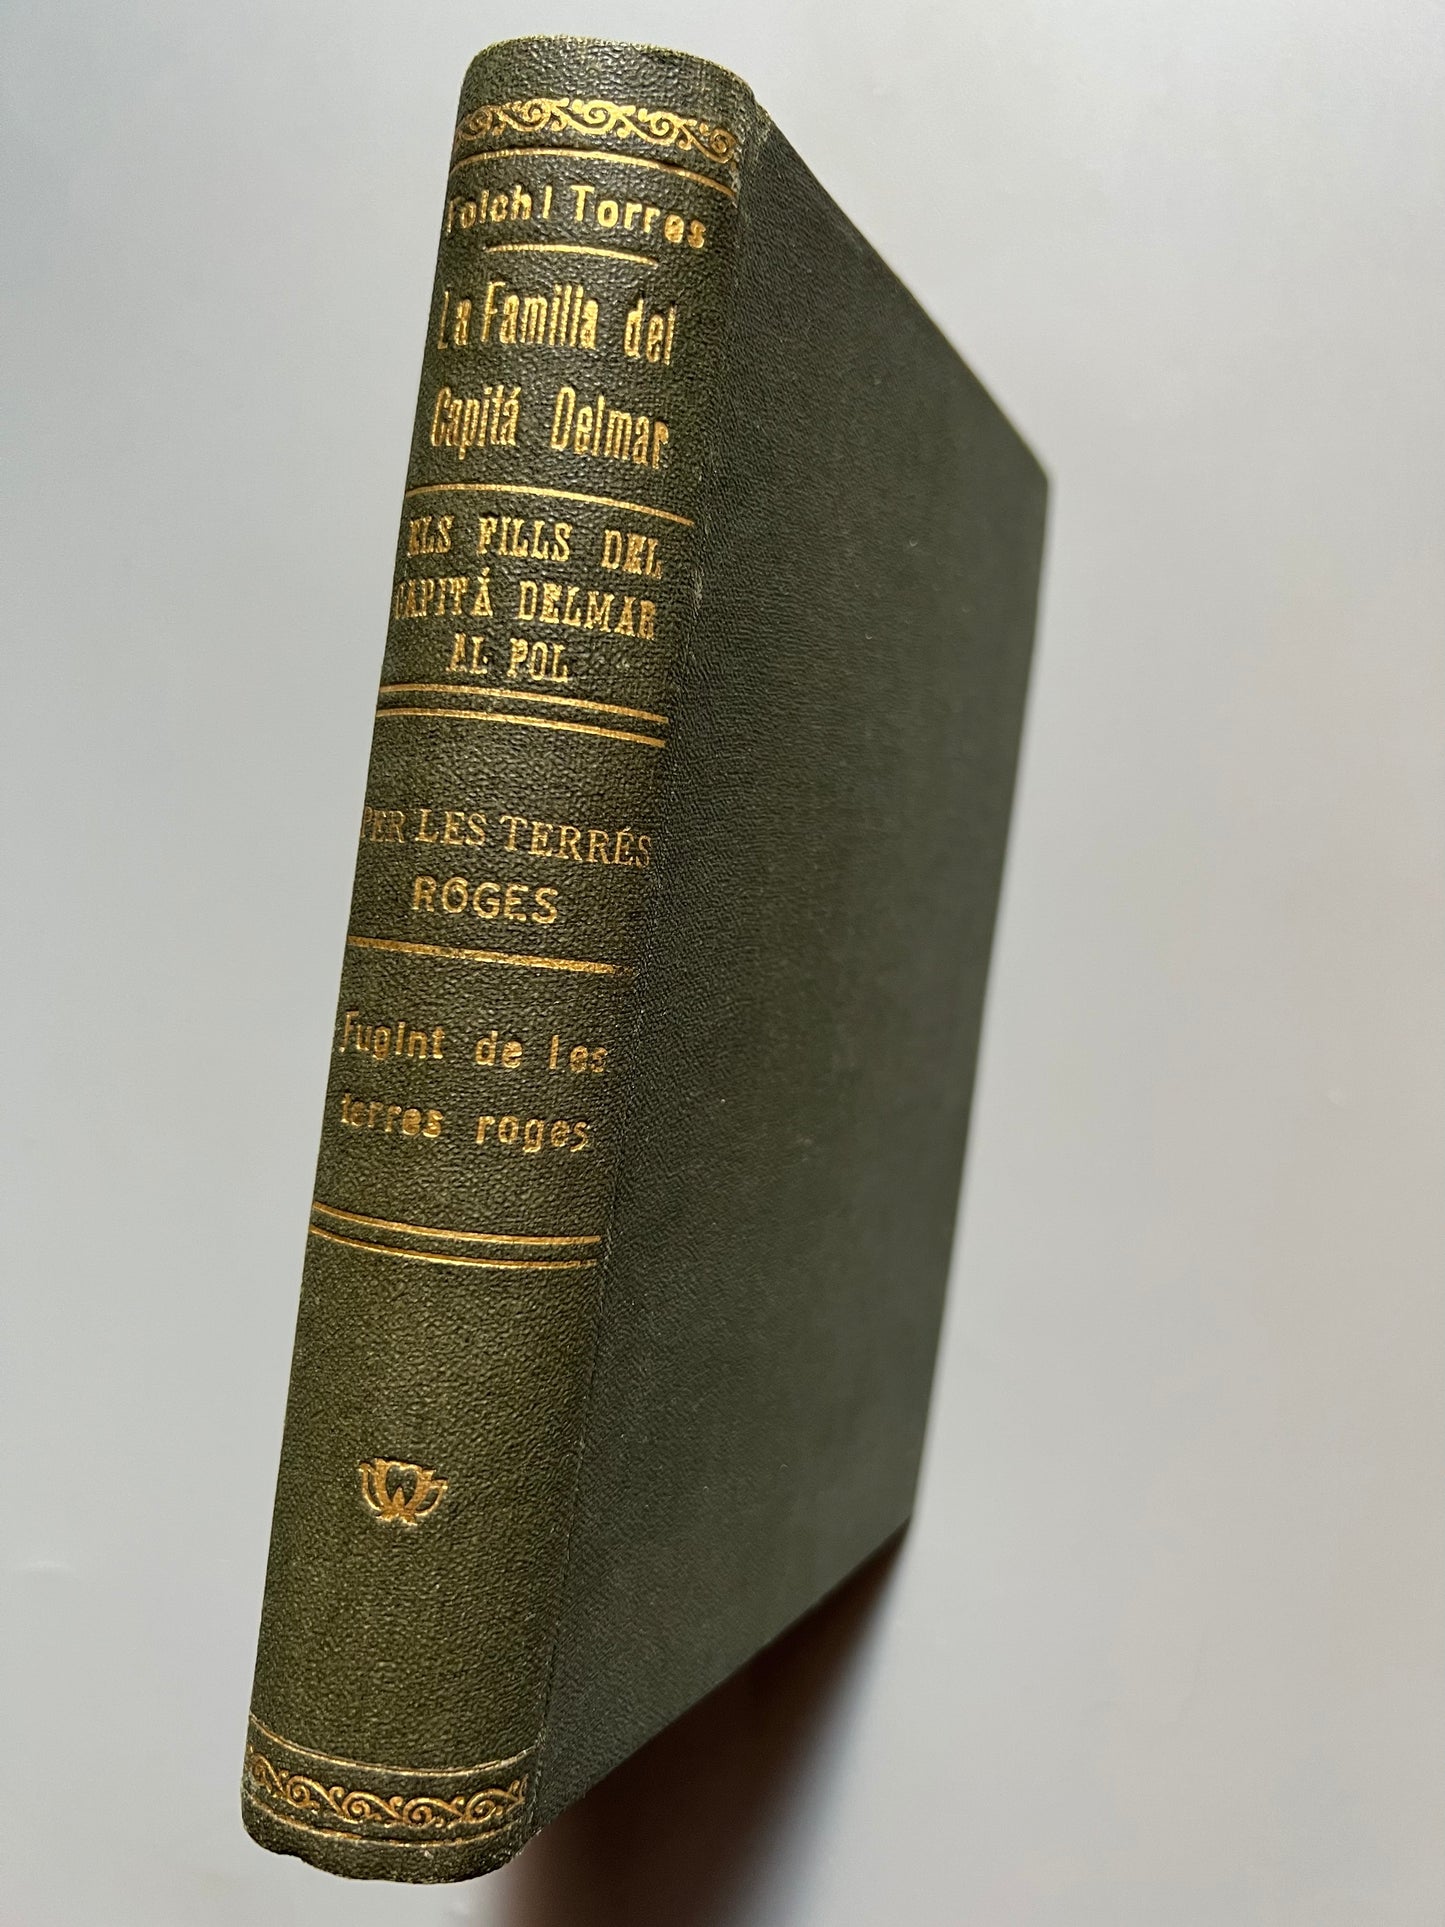 4 novelas de Josep Mª Folch i Torres - Biblioteca Patufet, 1913